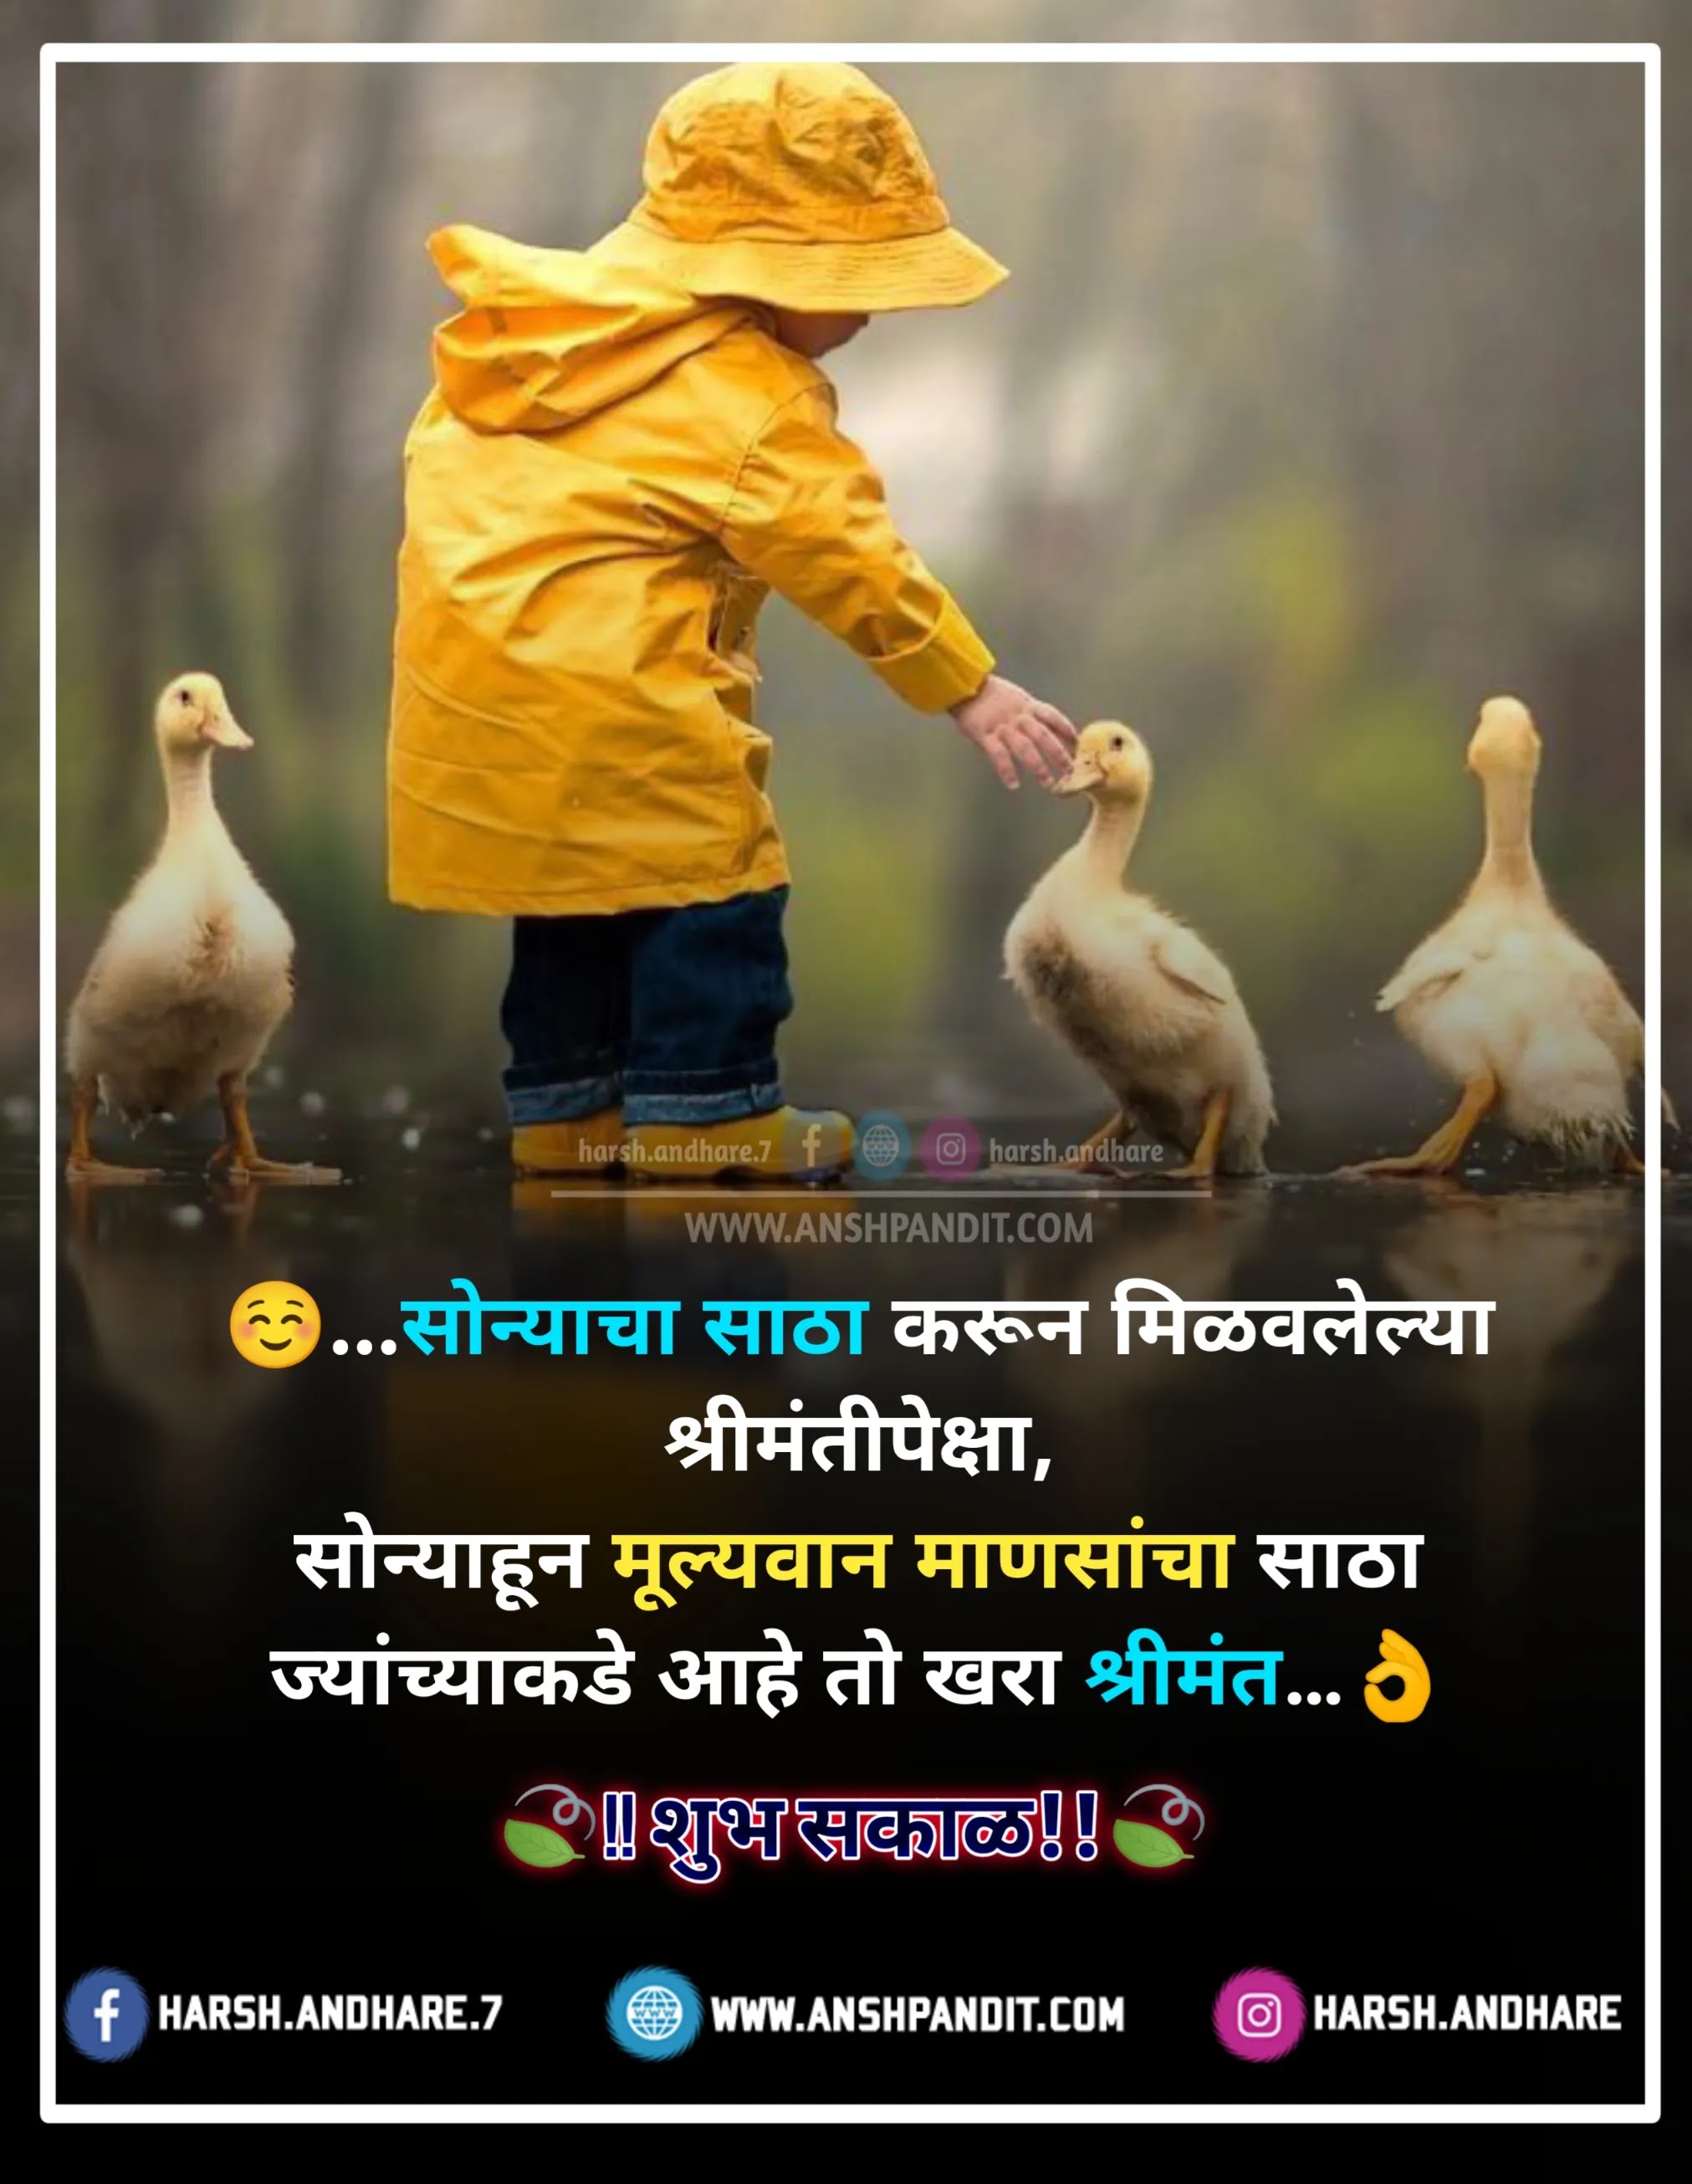 Good Morning Message in Marathi Images